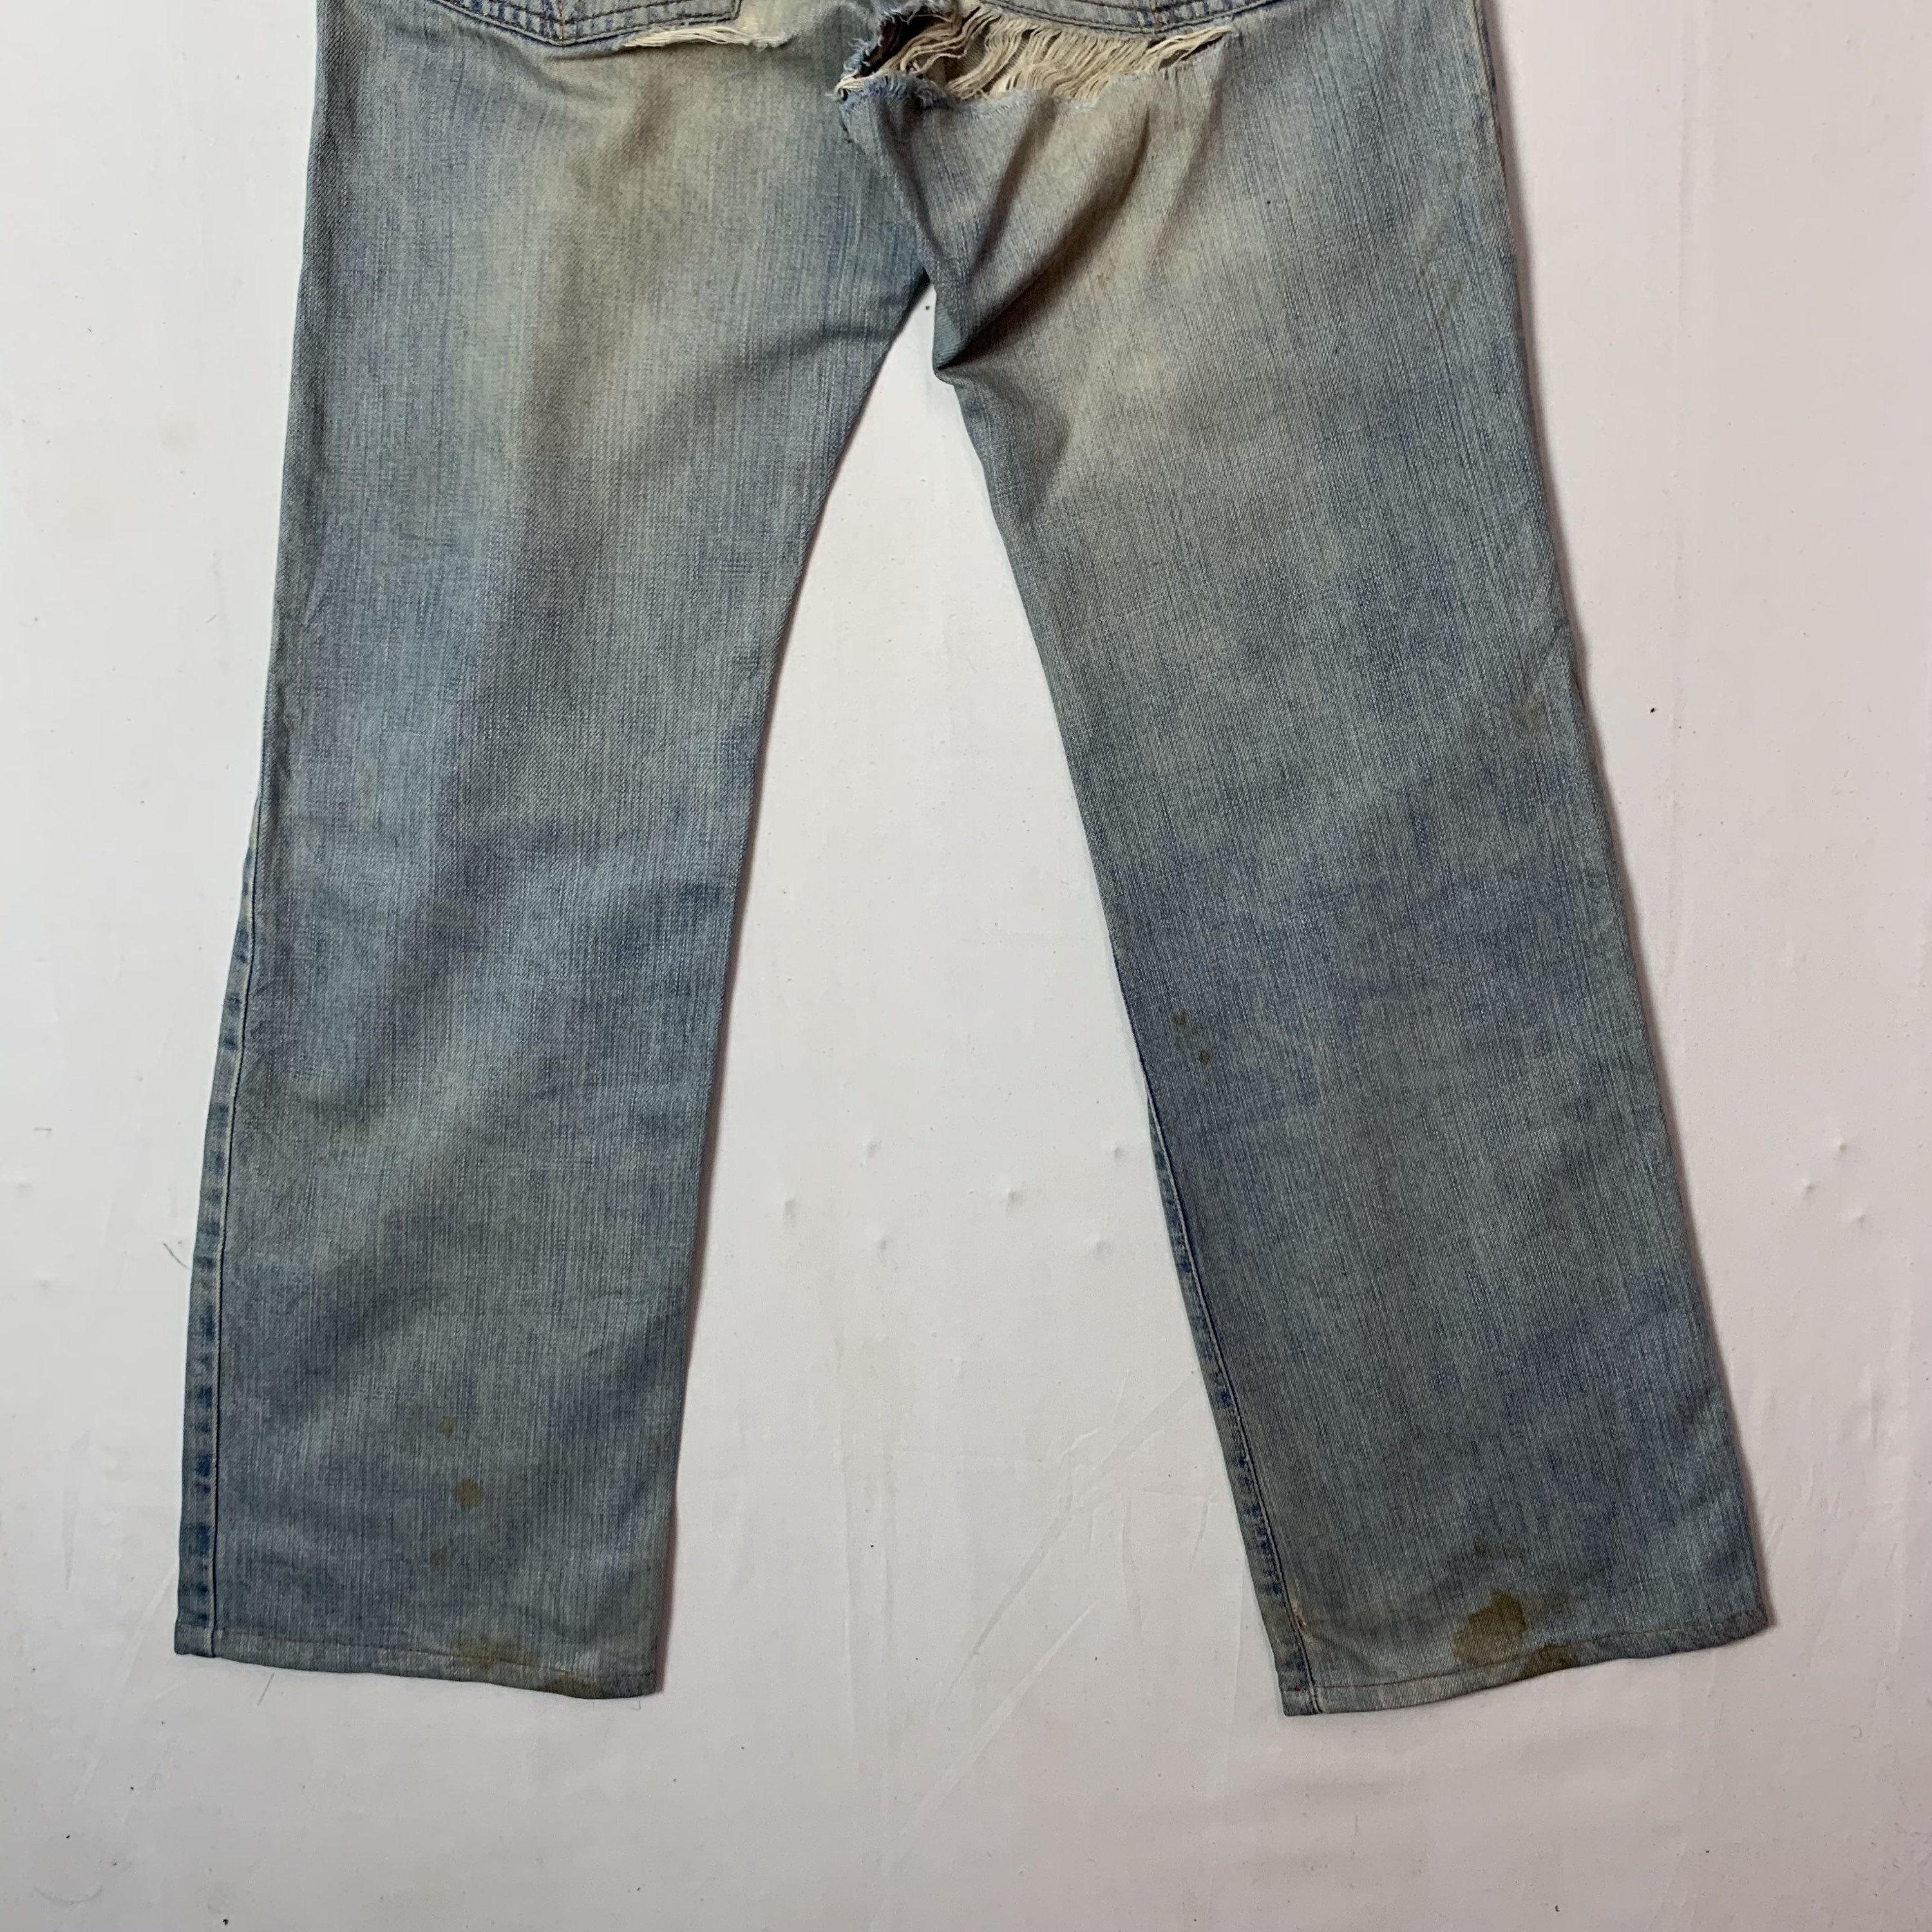 Vintage D & G Rare Design Jeans Vintage Dolce and Gabbana Distressed Denim Jeans W29